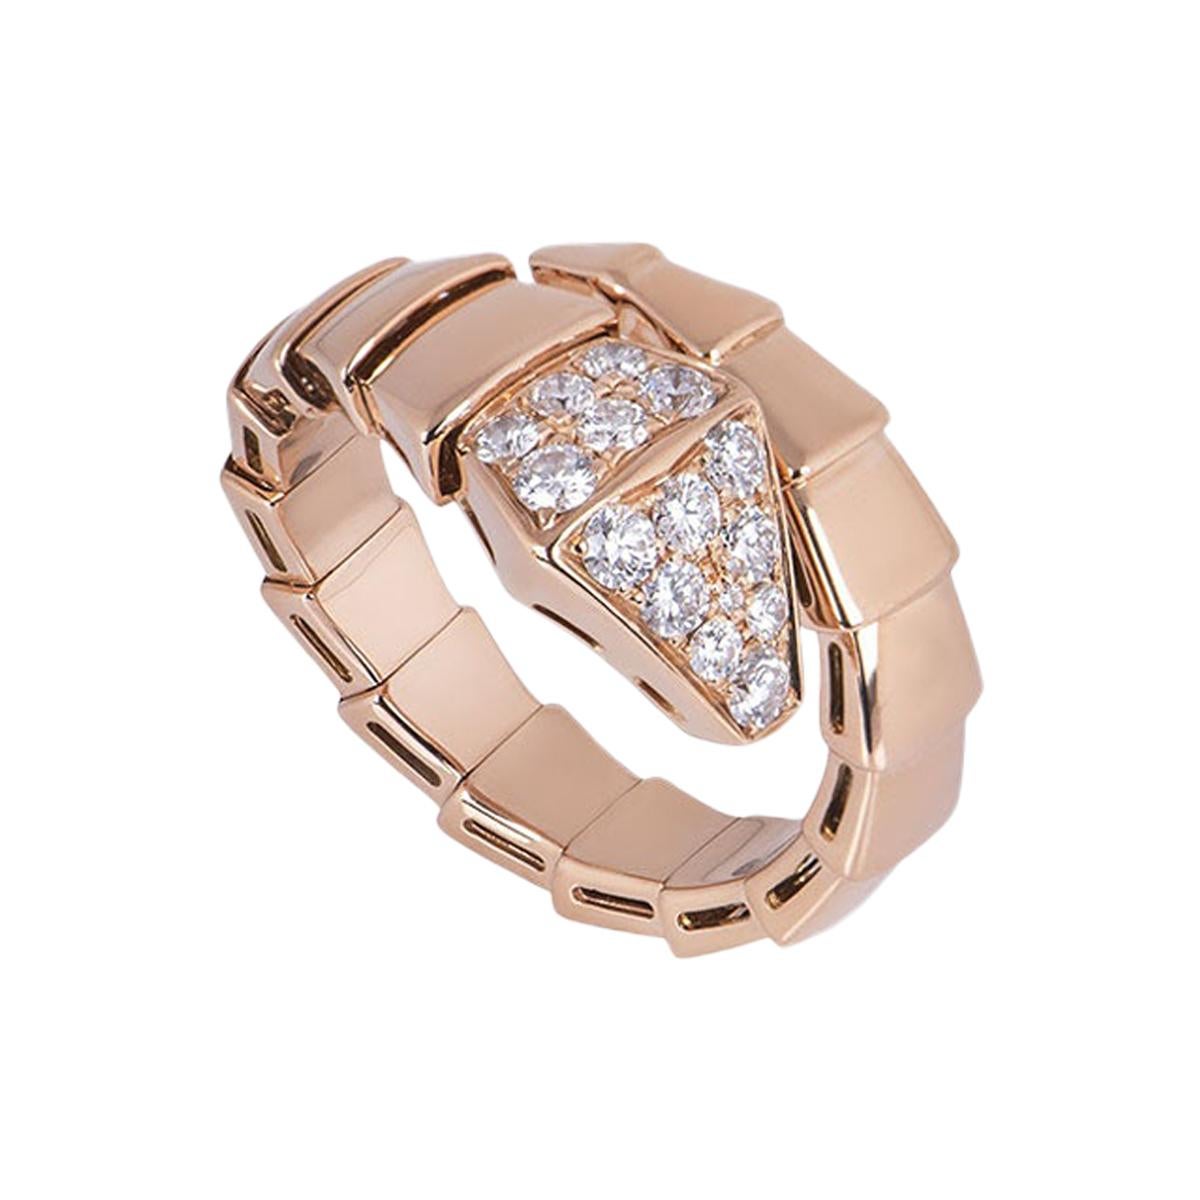 Bvlgari Rose Gold Diamond Serpenti Ring